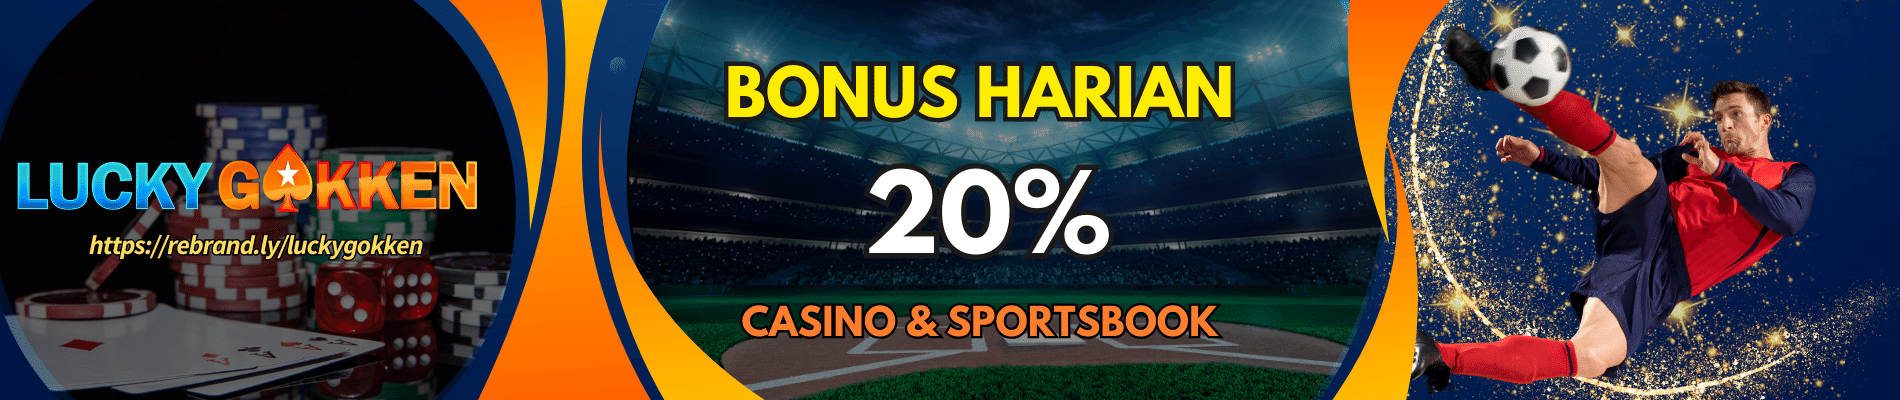 Bonus Harian 10% | Casino & Sportsbook